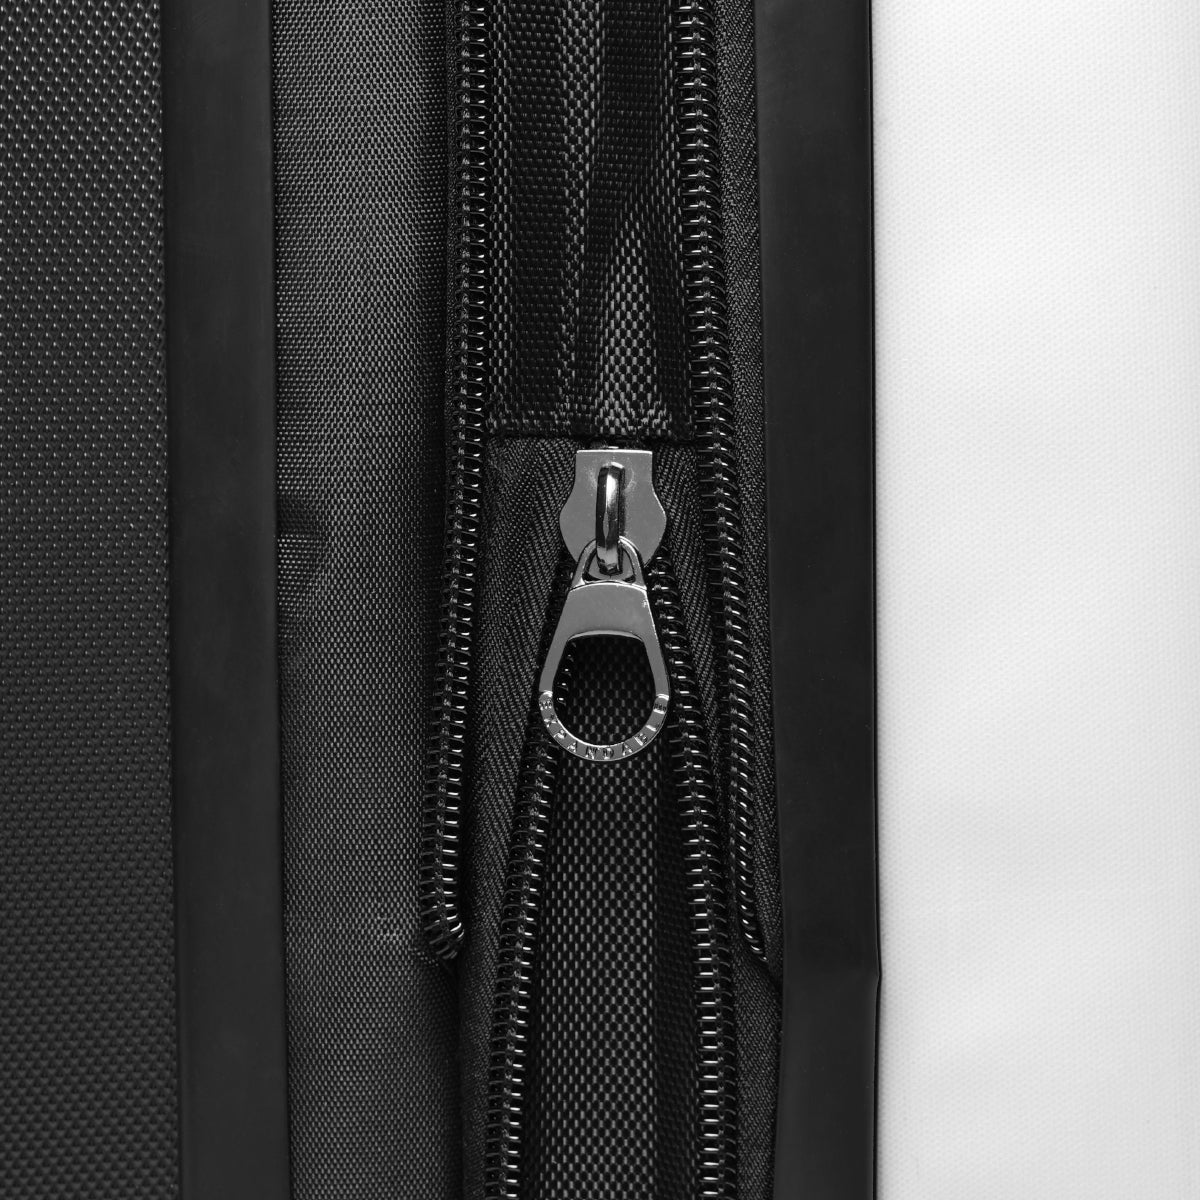 Getrott Grace Jones Island Life 1985 Black Cabin Suitcase Inner Pockets Extended Storage Adjustable Telescopic Handle Inner Pockets Double wheeled Polycarbonate Hard-shell Built-in Lock